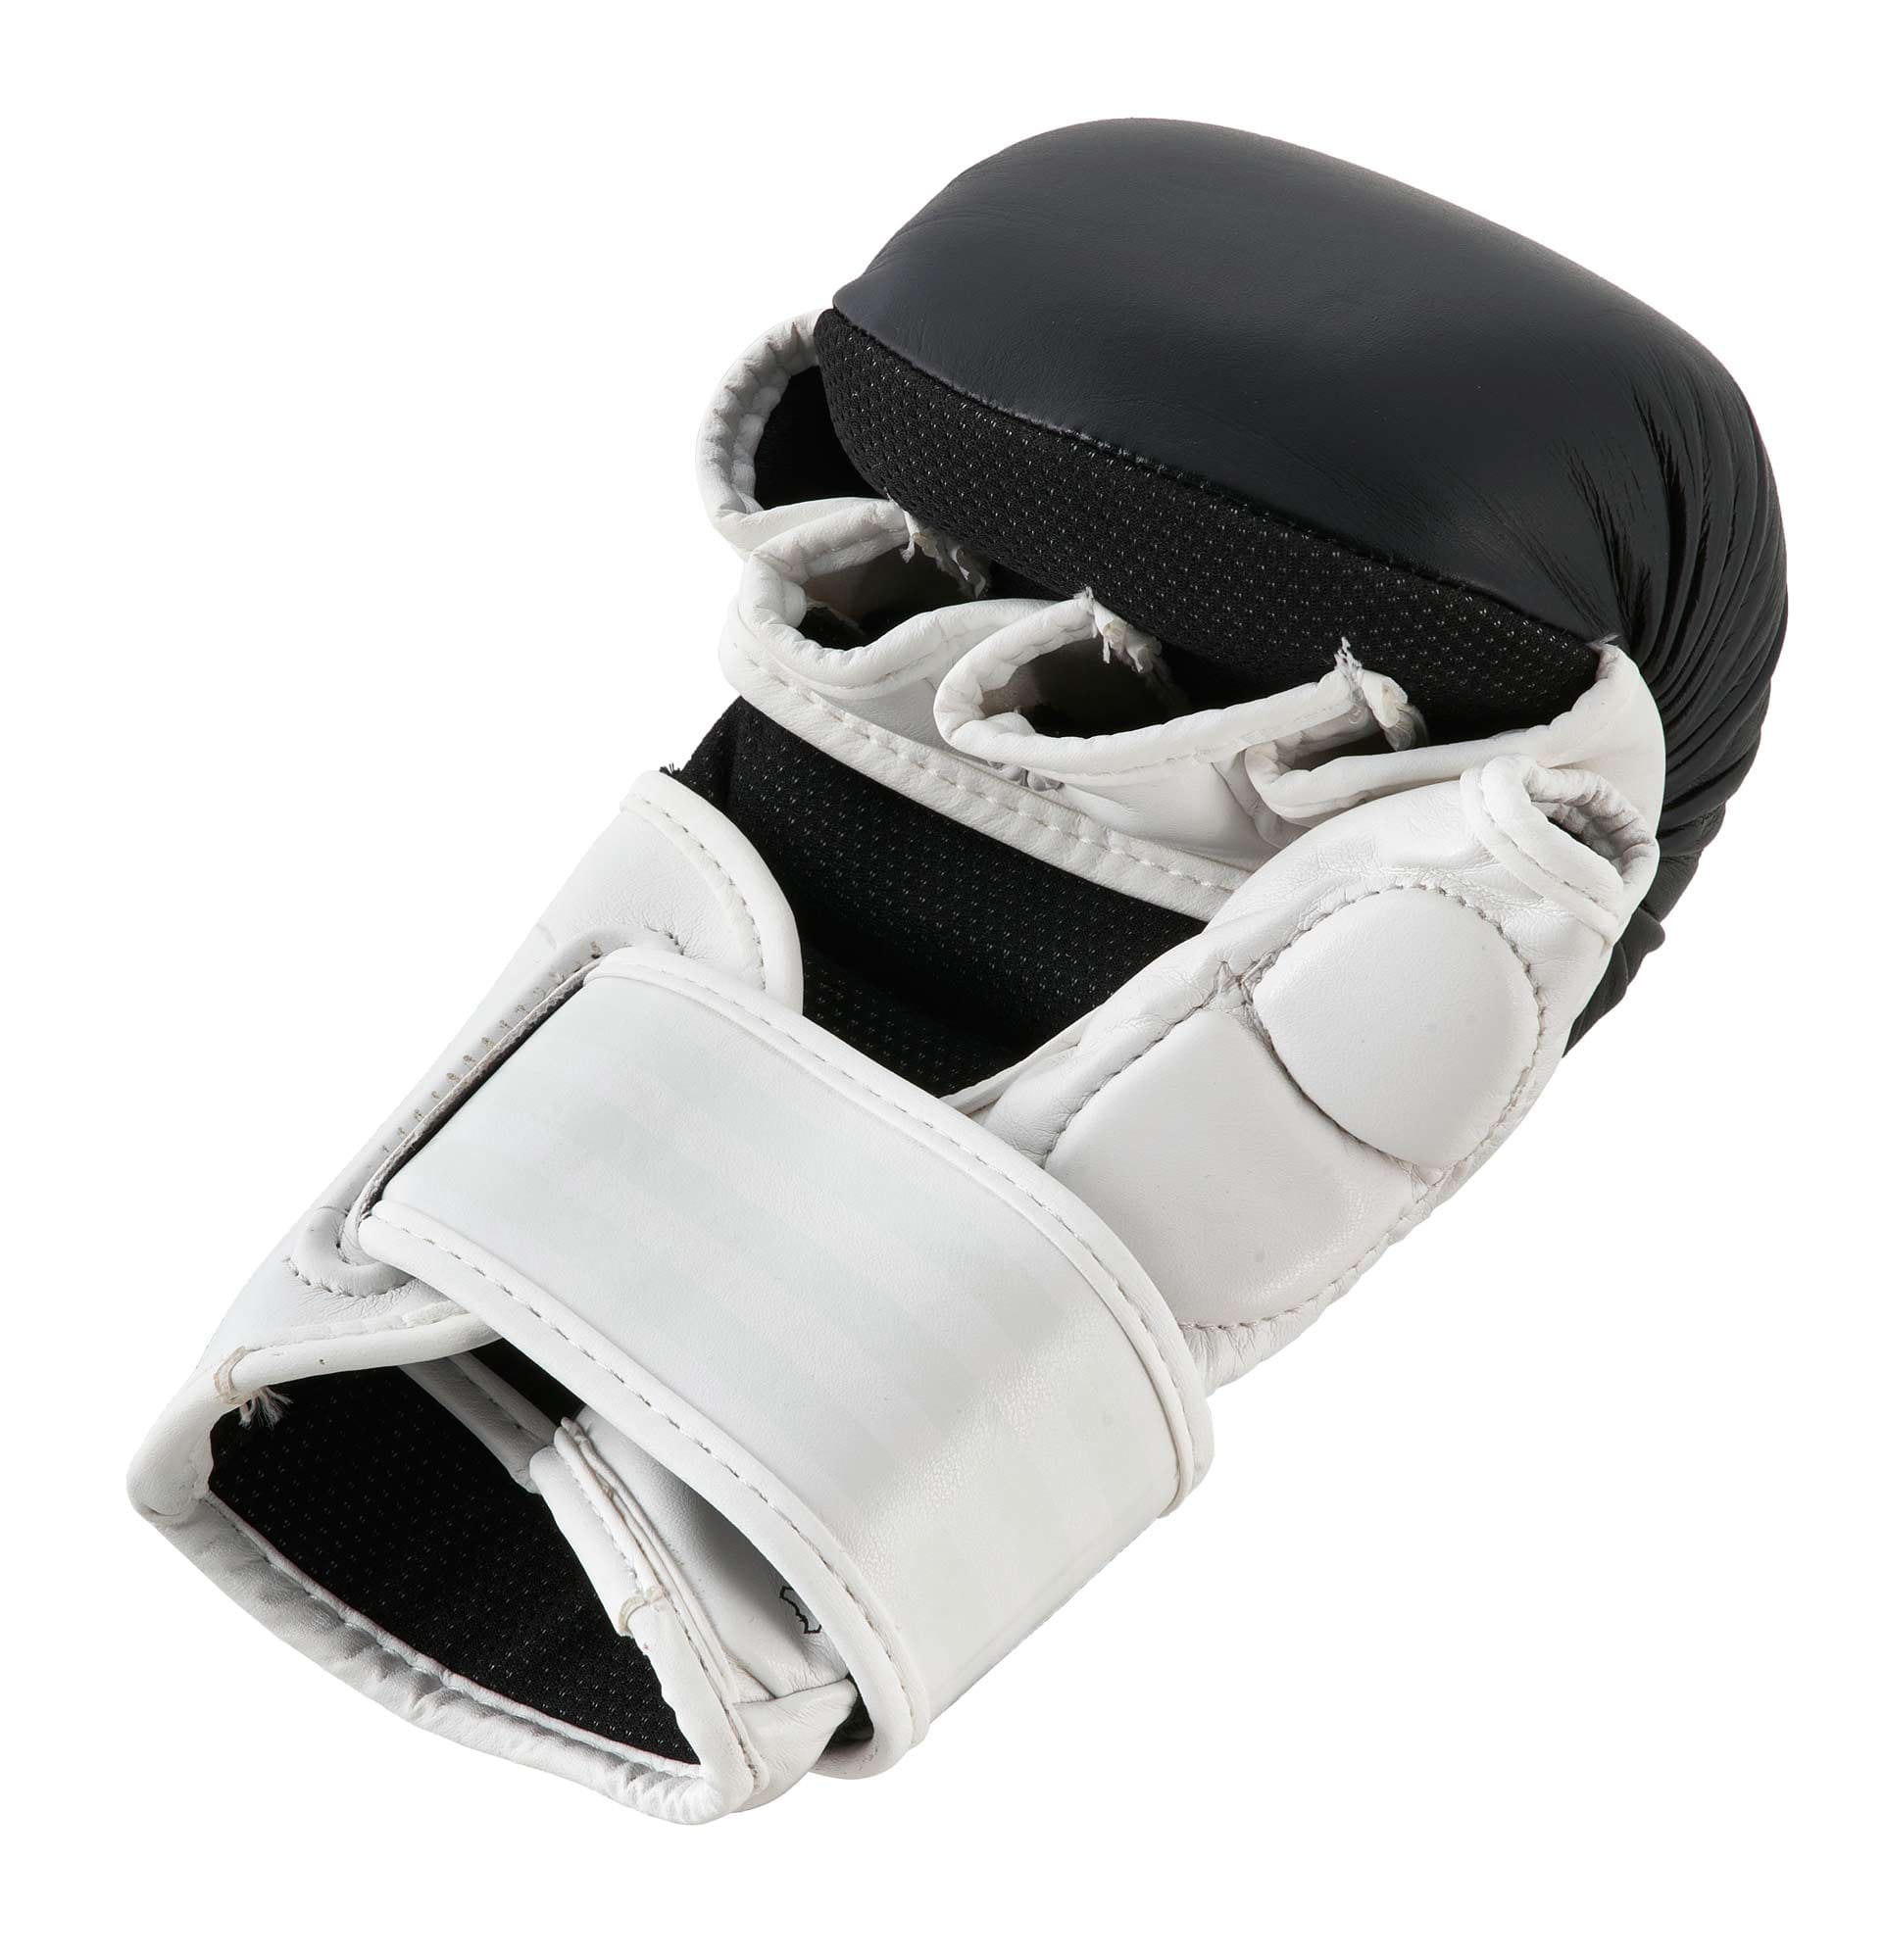 Buy Adidas MMA Sparring Gloves Black/White Online ✓ - emparor Fight Shop